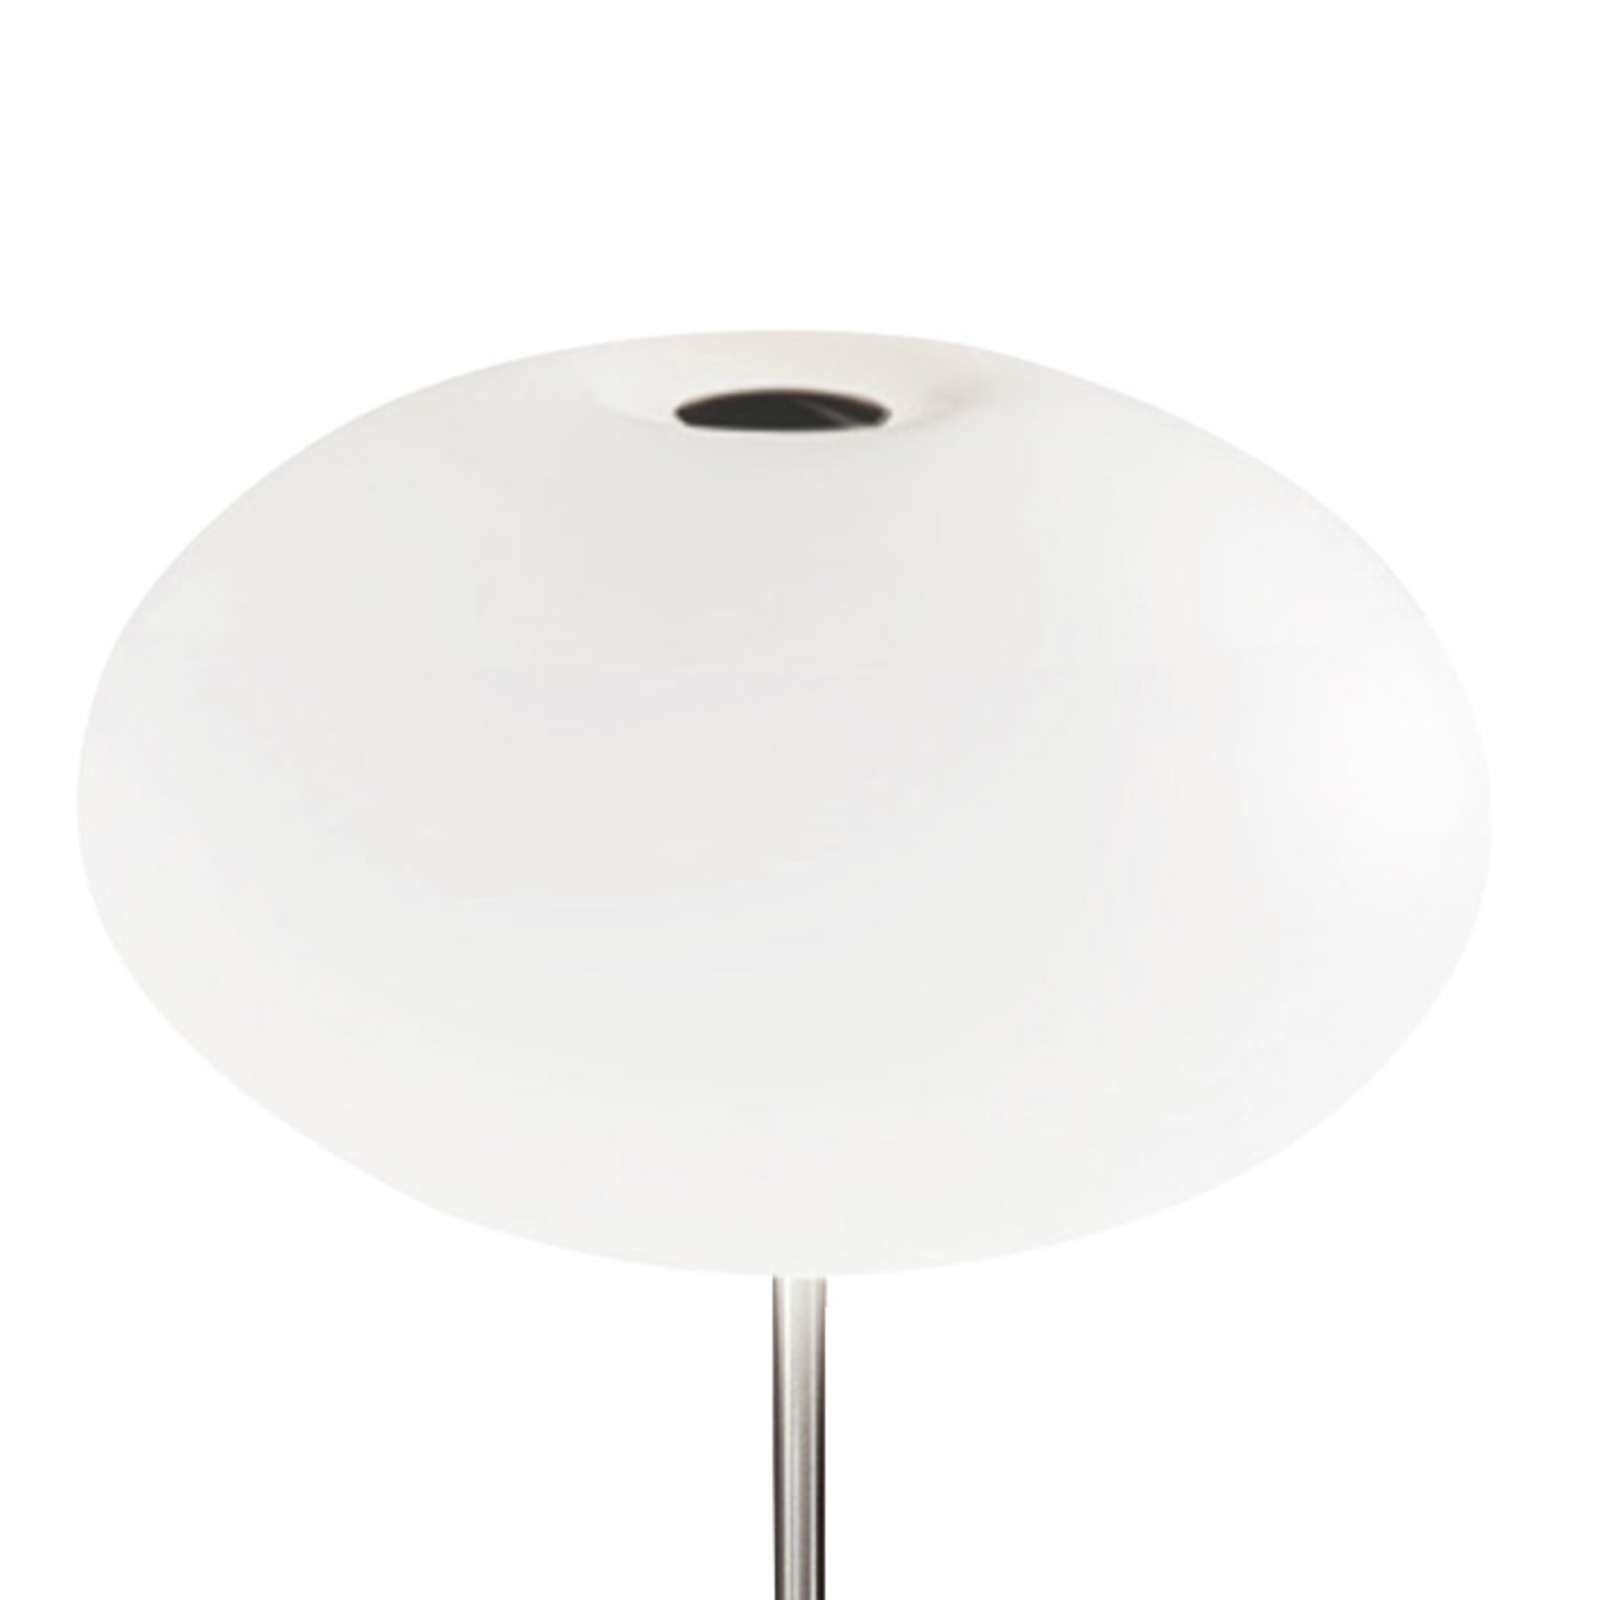 Casablanca Aih bordslampa, Ø 28 cm vit matt